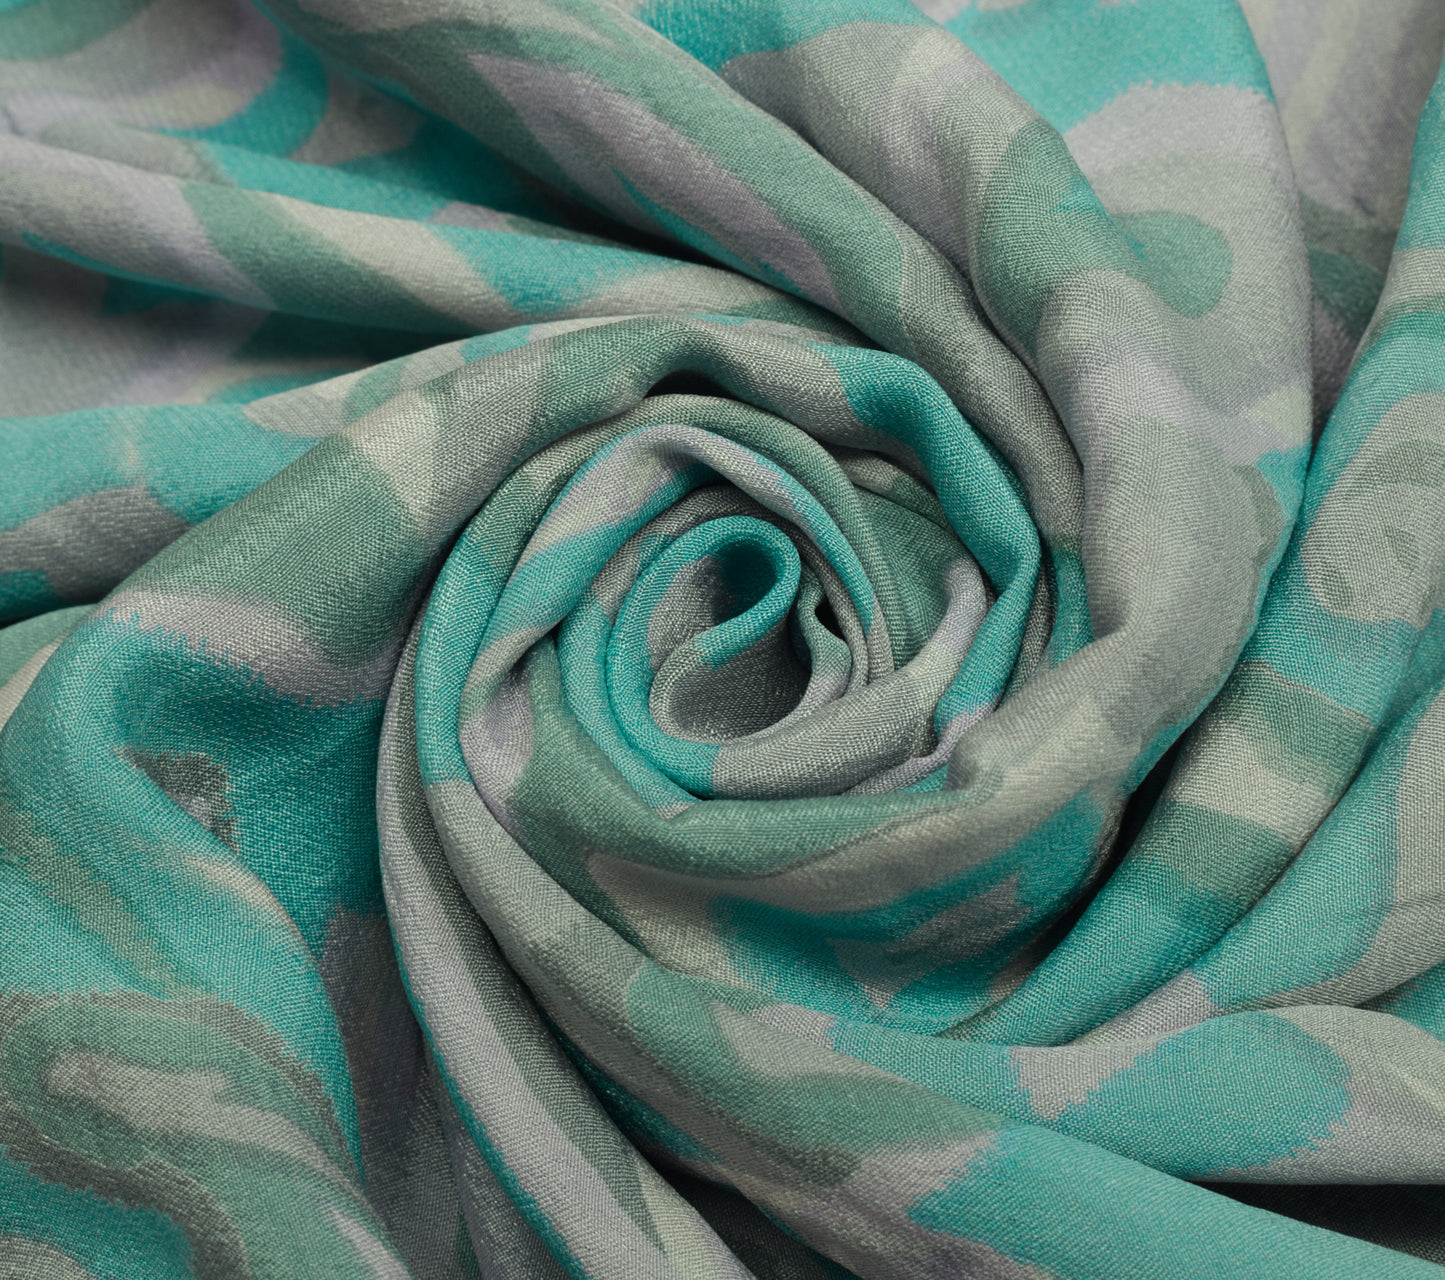 Sushila Vintage MultiColor Saree 100%Pure Crepe Silk Printed Paisley Soft Fabric